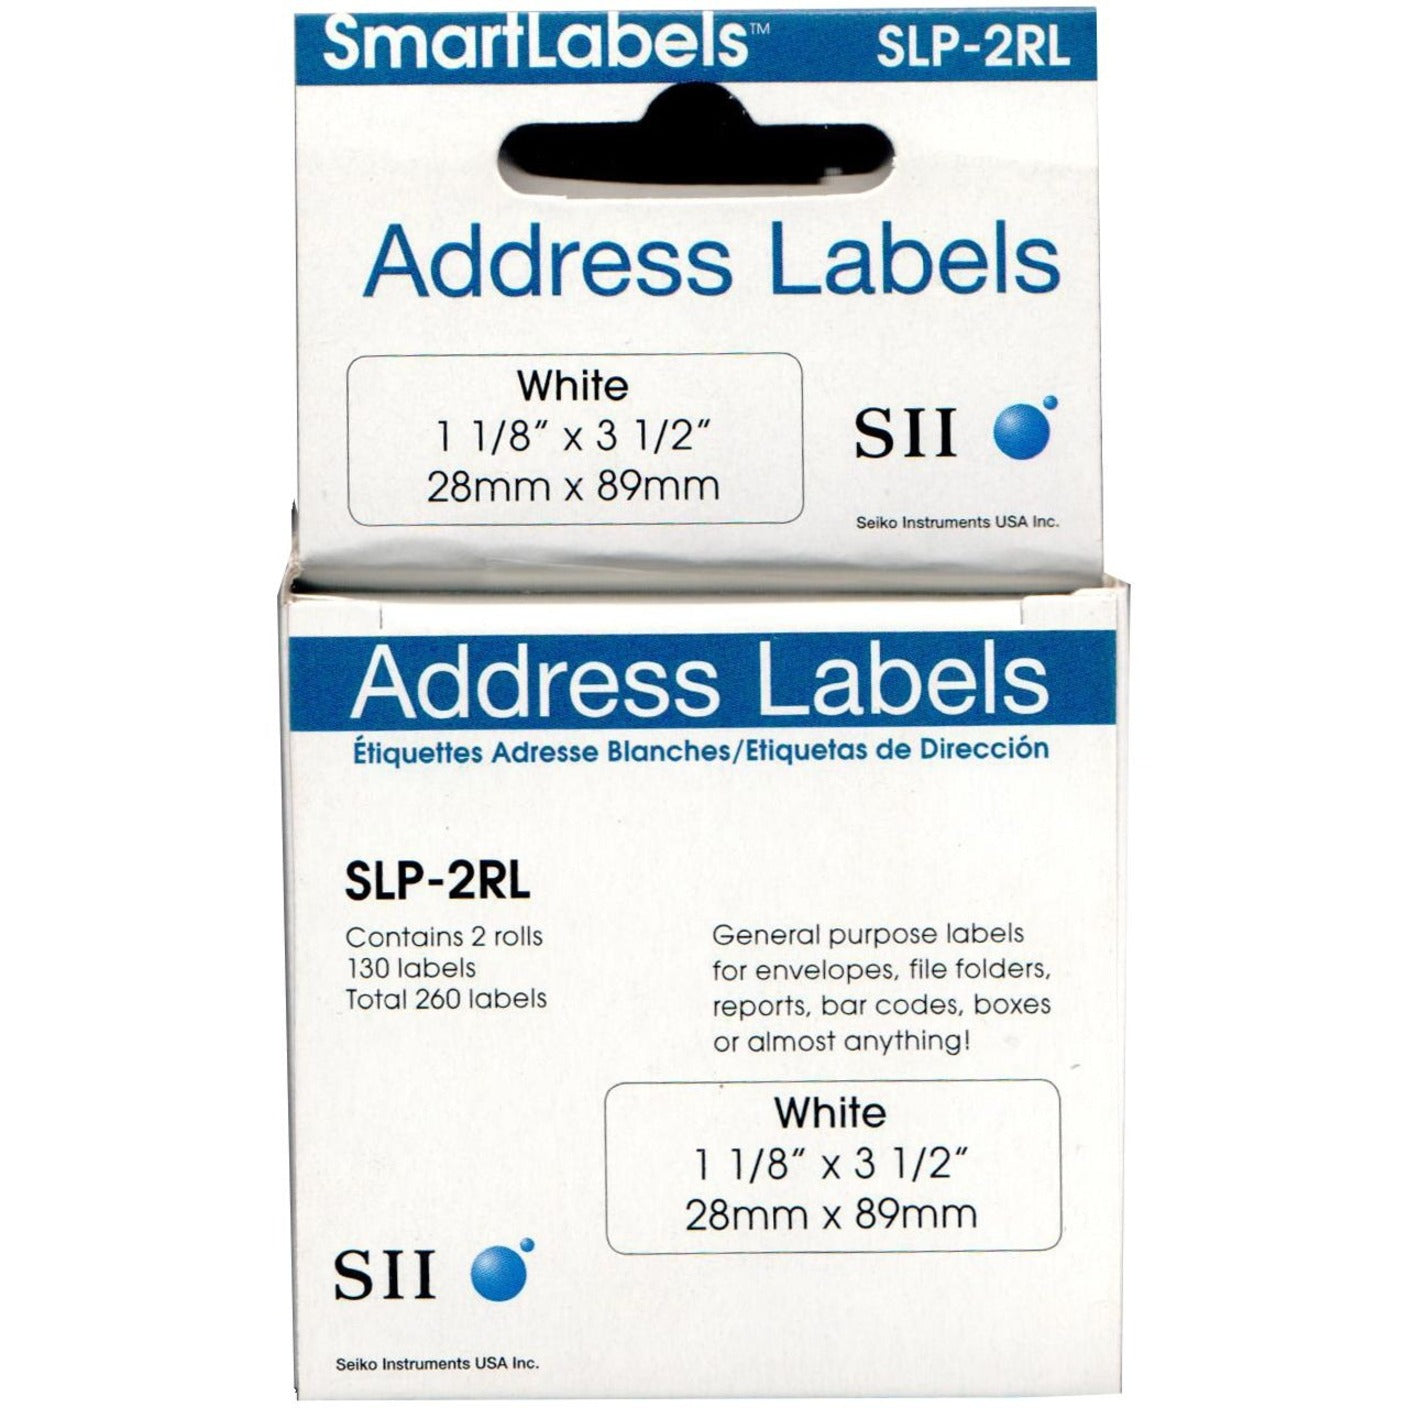 Seiko SLP-2RL SmartLabel Printer Address Labels, 1-1/8"x3-1/2", 130 Labels per Roll